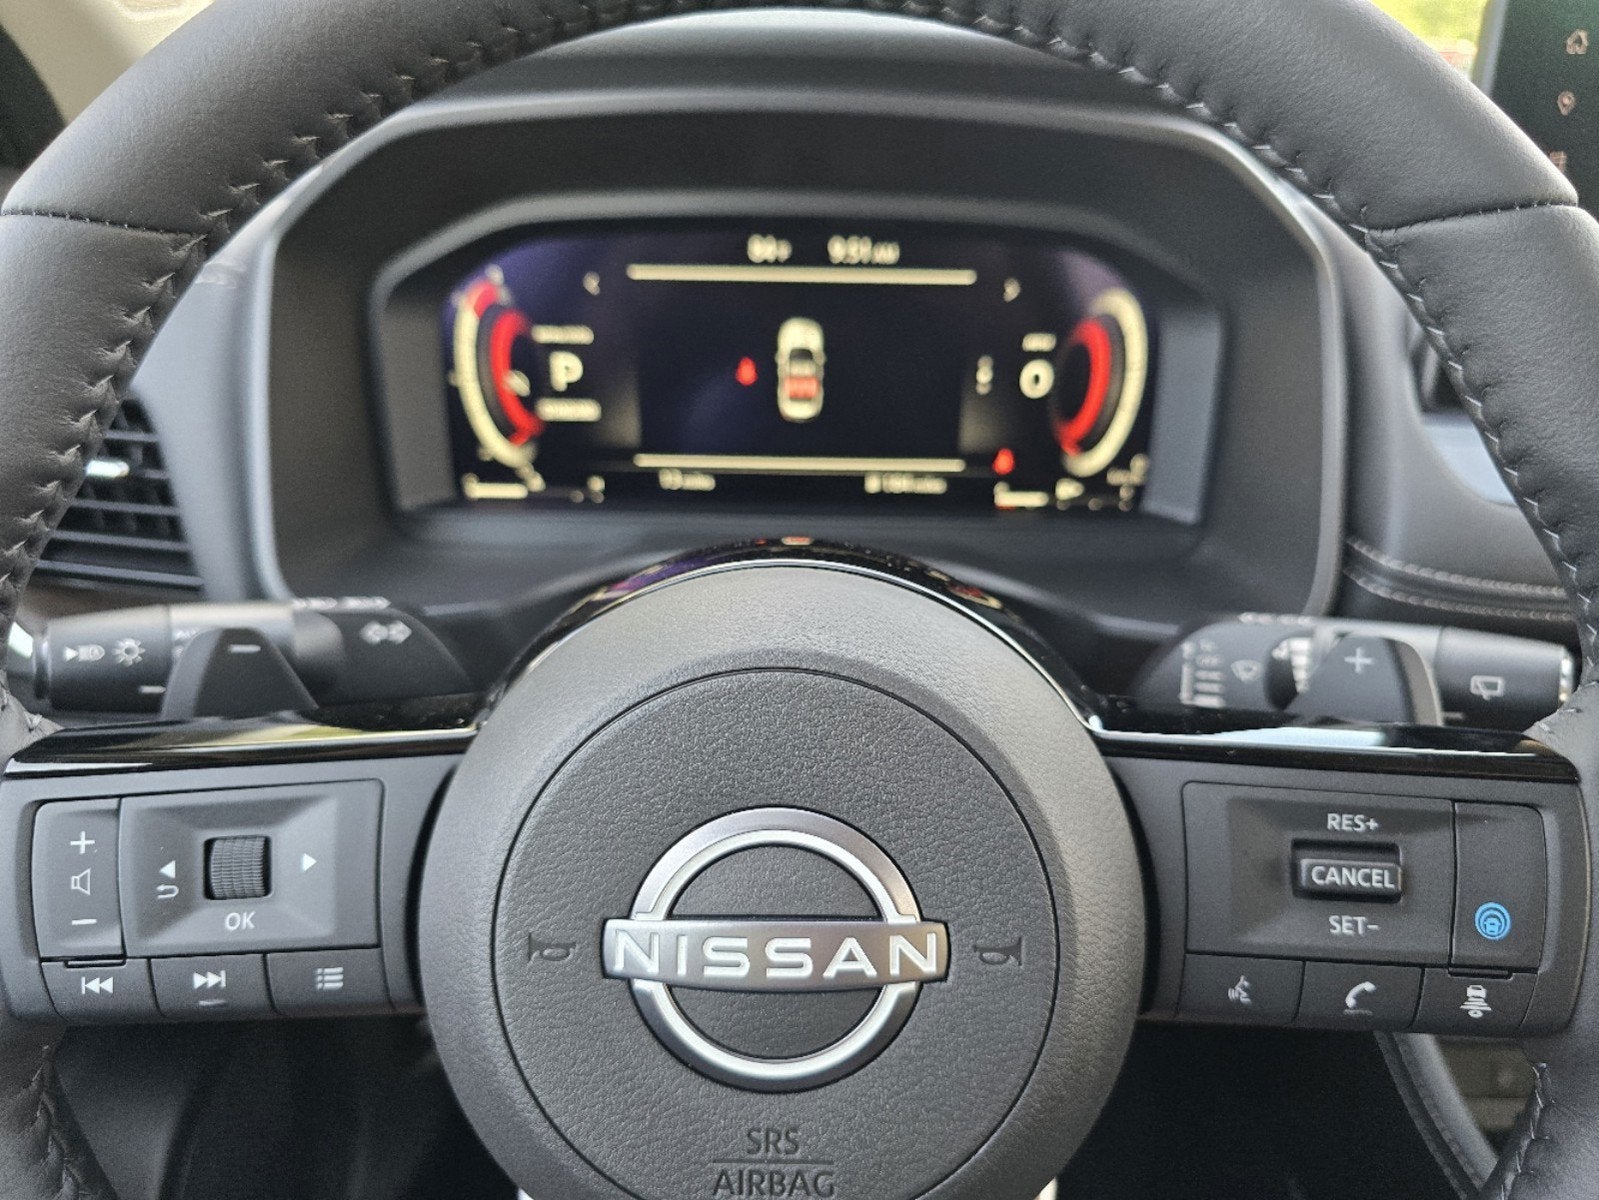 2024 Nissan Rogue Platinum FWD Platinum